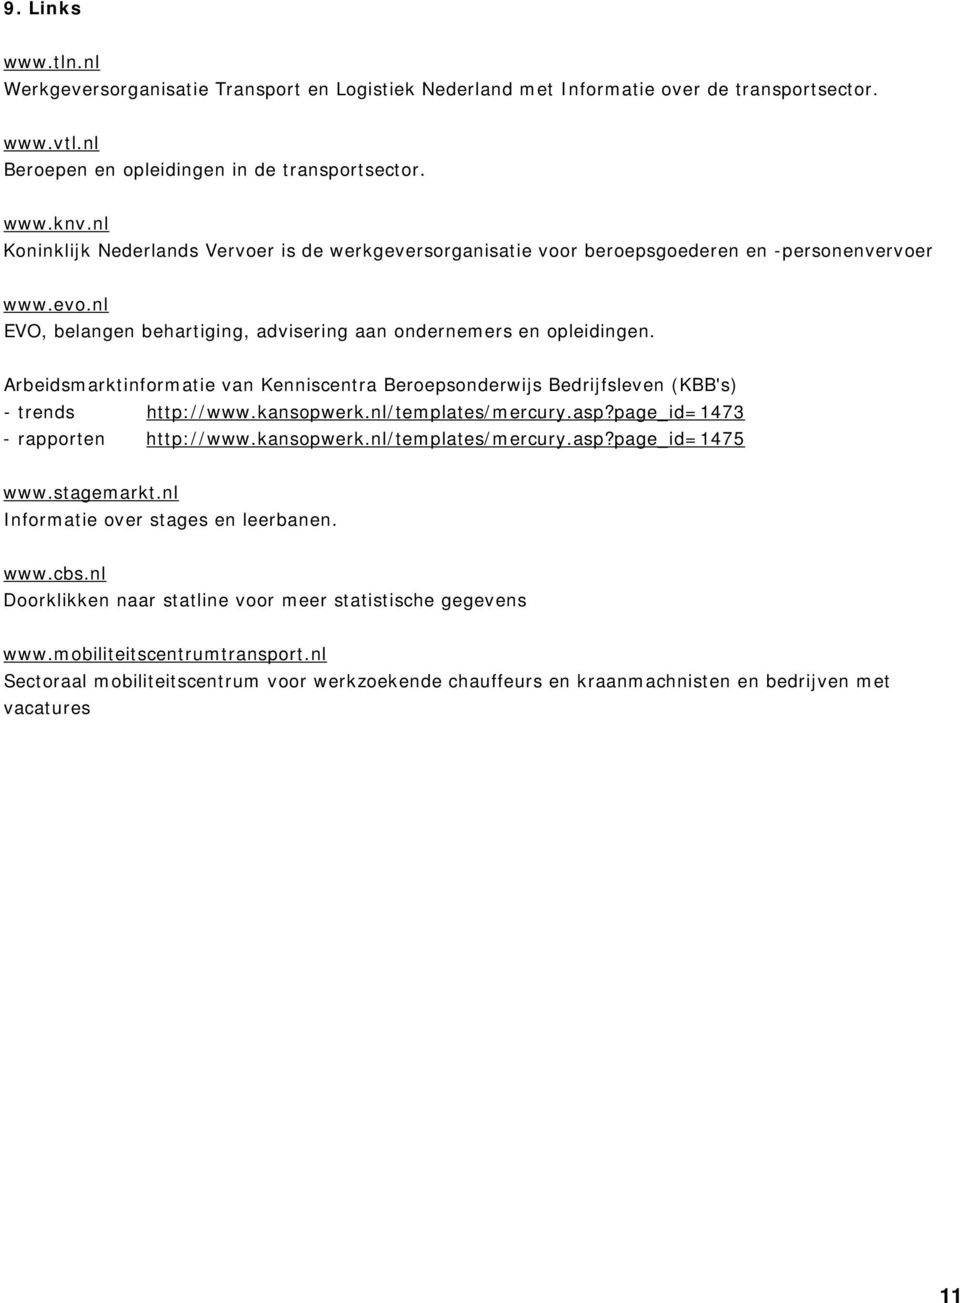 Arbeidsmarktinformatie van Kenniscentra Beroepsonderwijs Bedrijfsleven (KBB's) - trends http://www.kansopwerk.nl/templates/mercury.asp?page_id=1473 - rapporten http://www.kansopwerk.nl/templates/mercury.asp?page_id=1475 www.